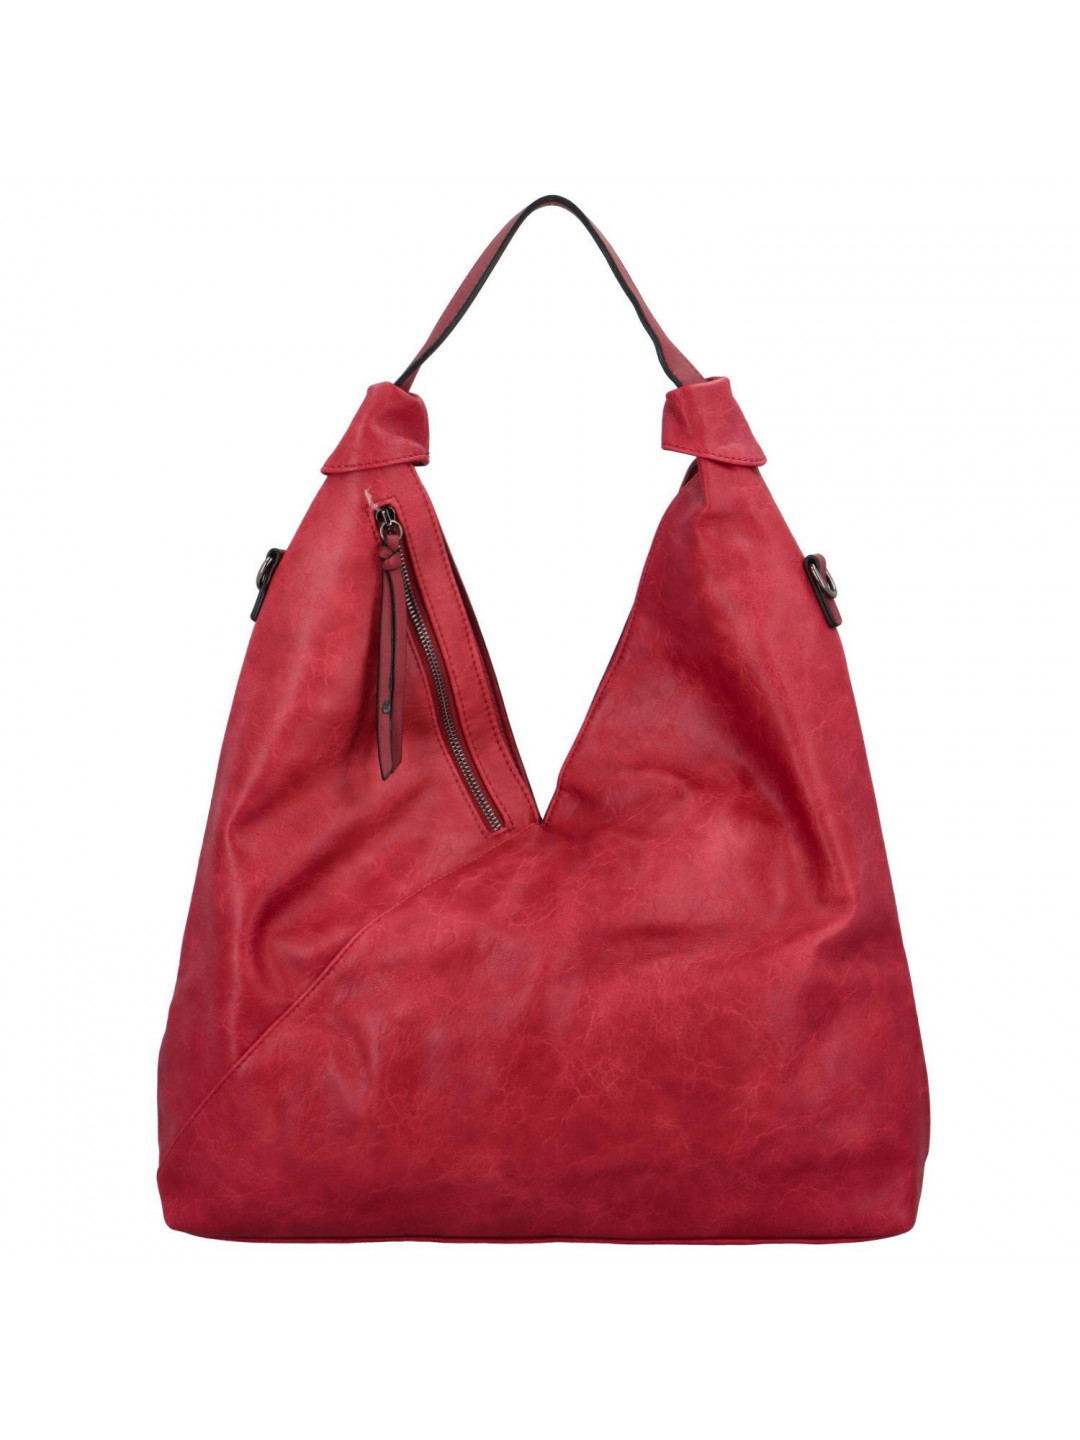 Stylová dámská koženková kabelka na rameno Valeria červená